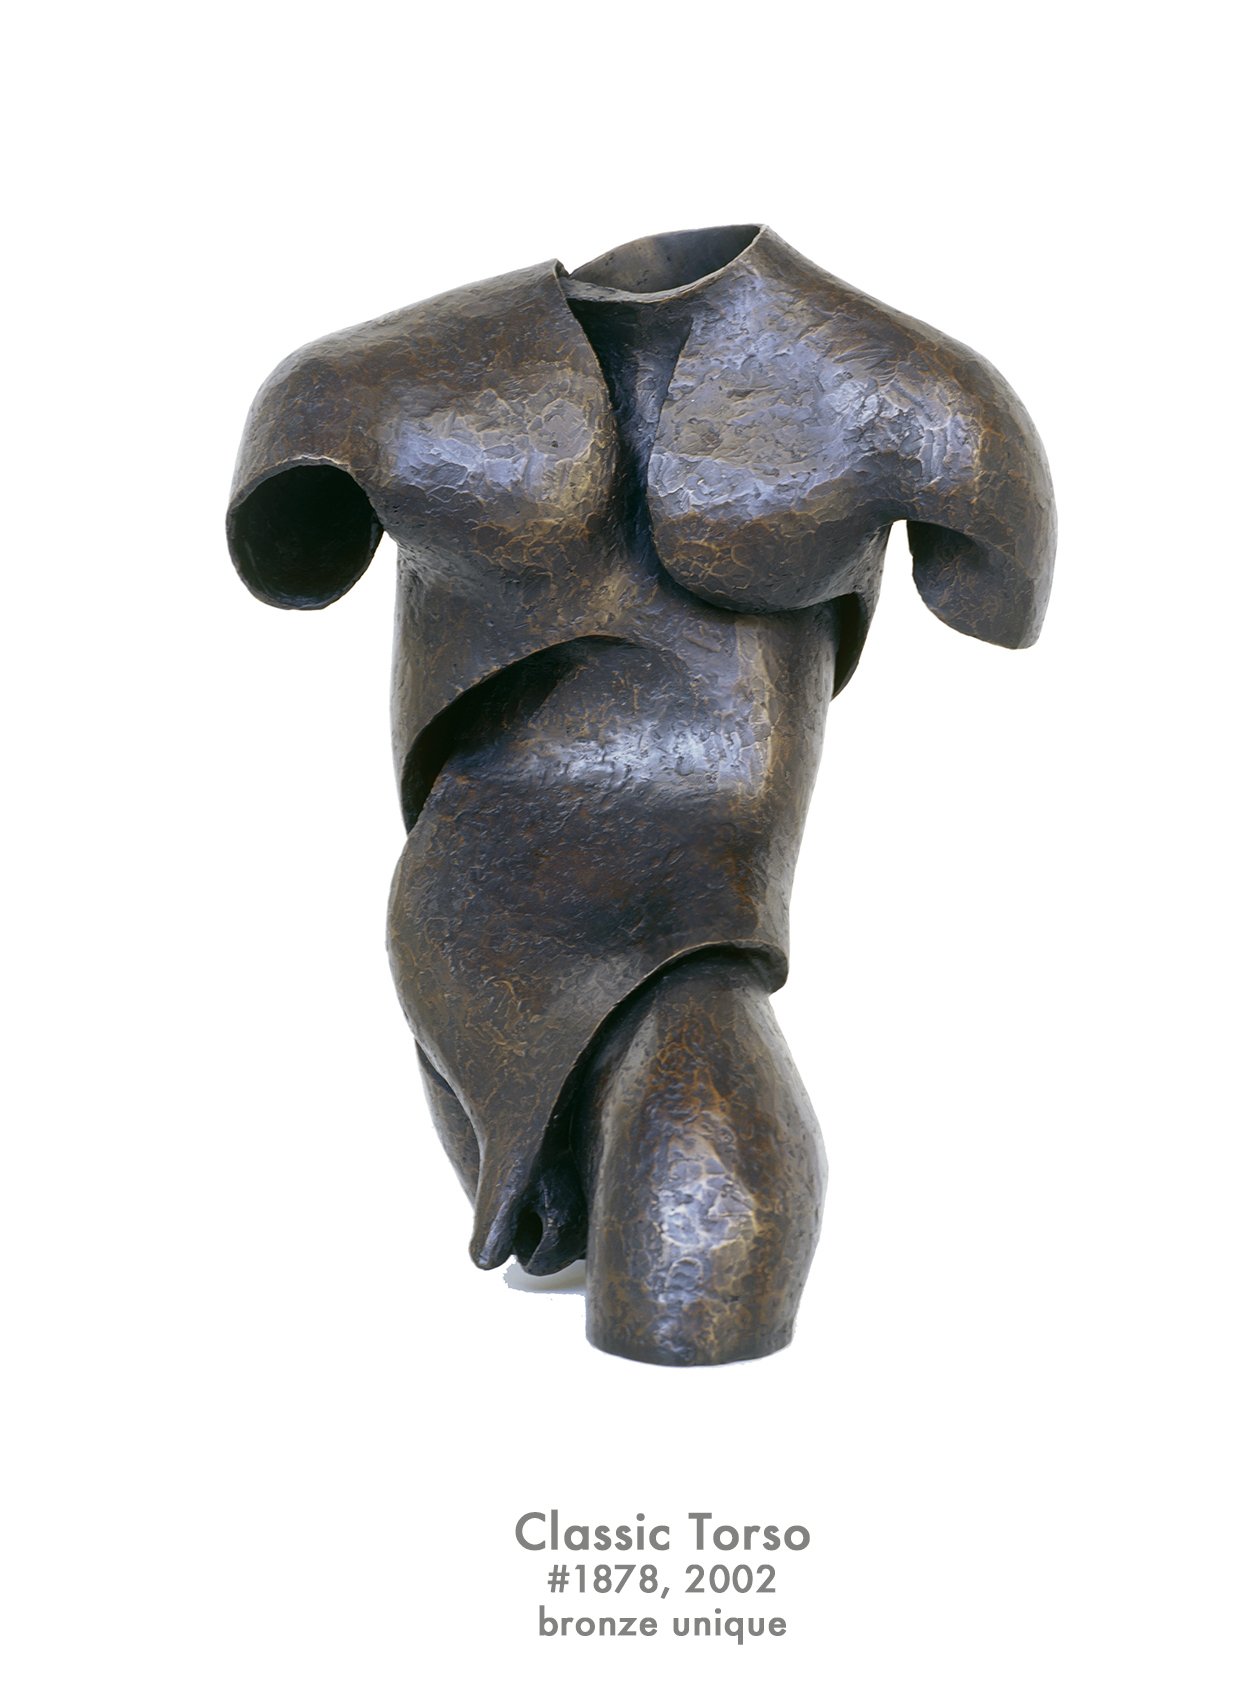 Classic torso, 2022, bronze, #188